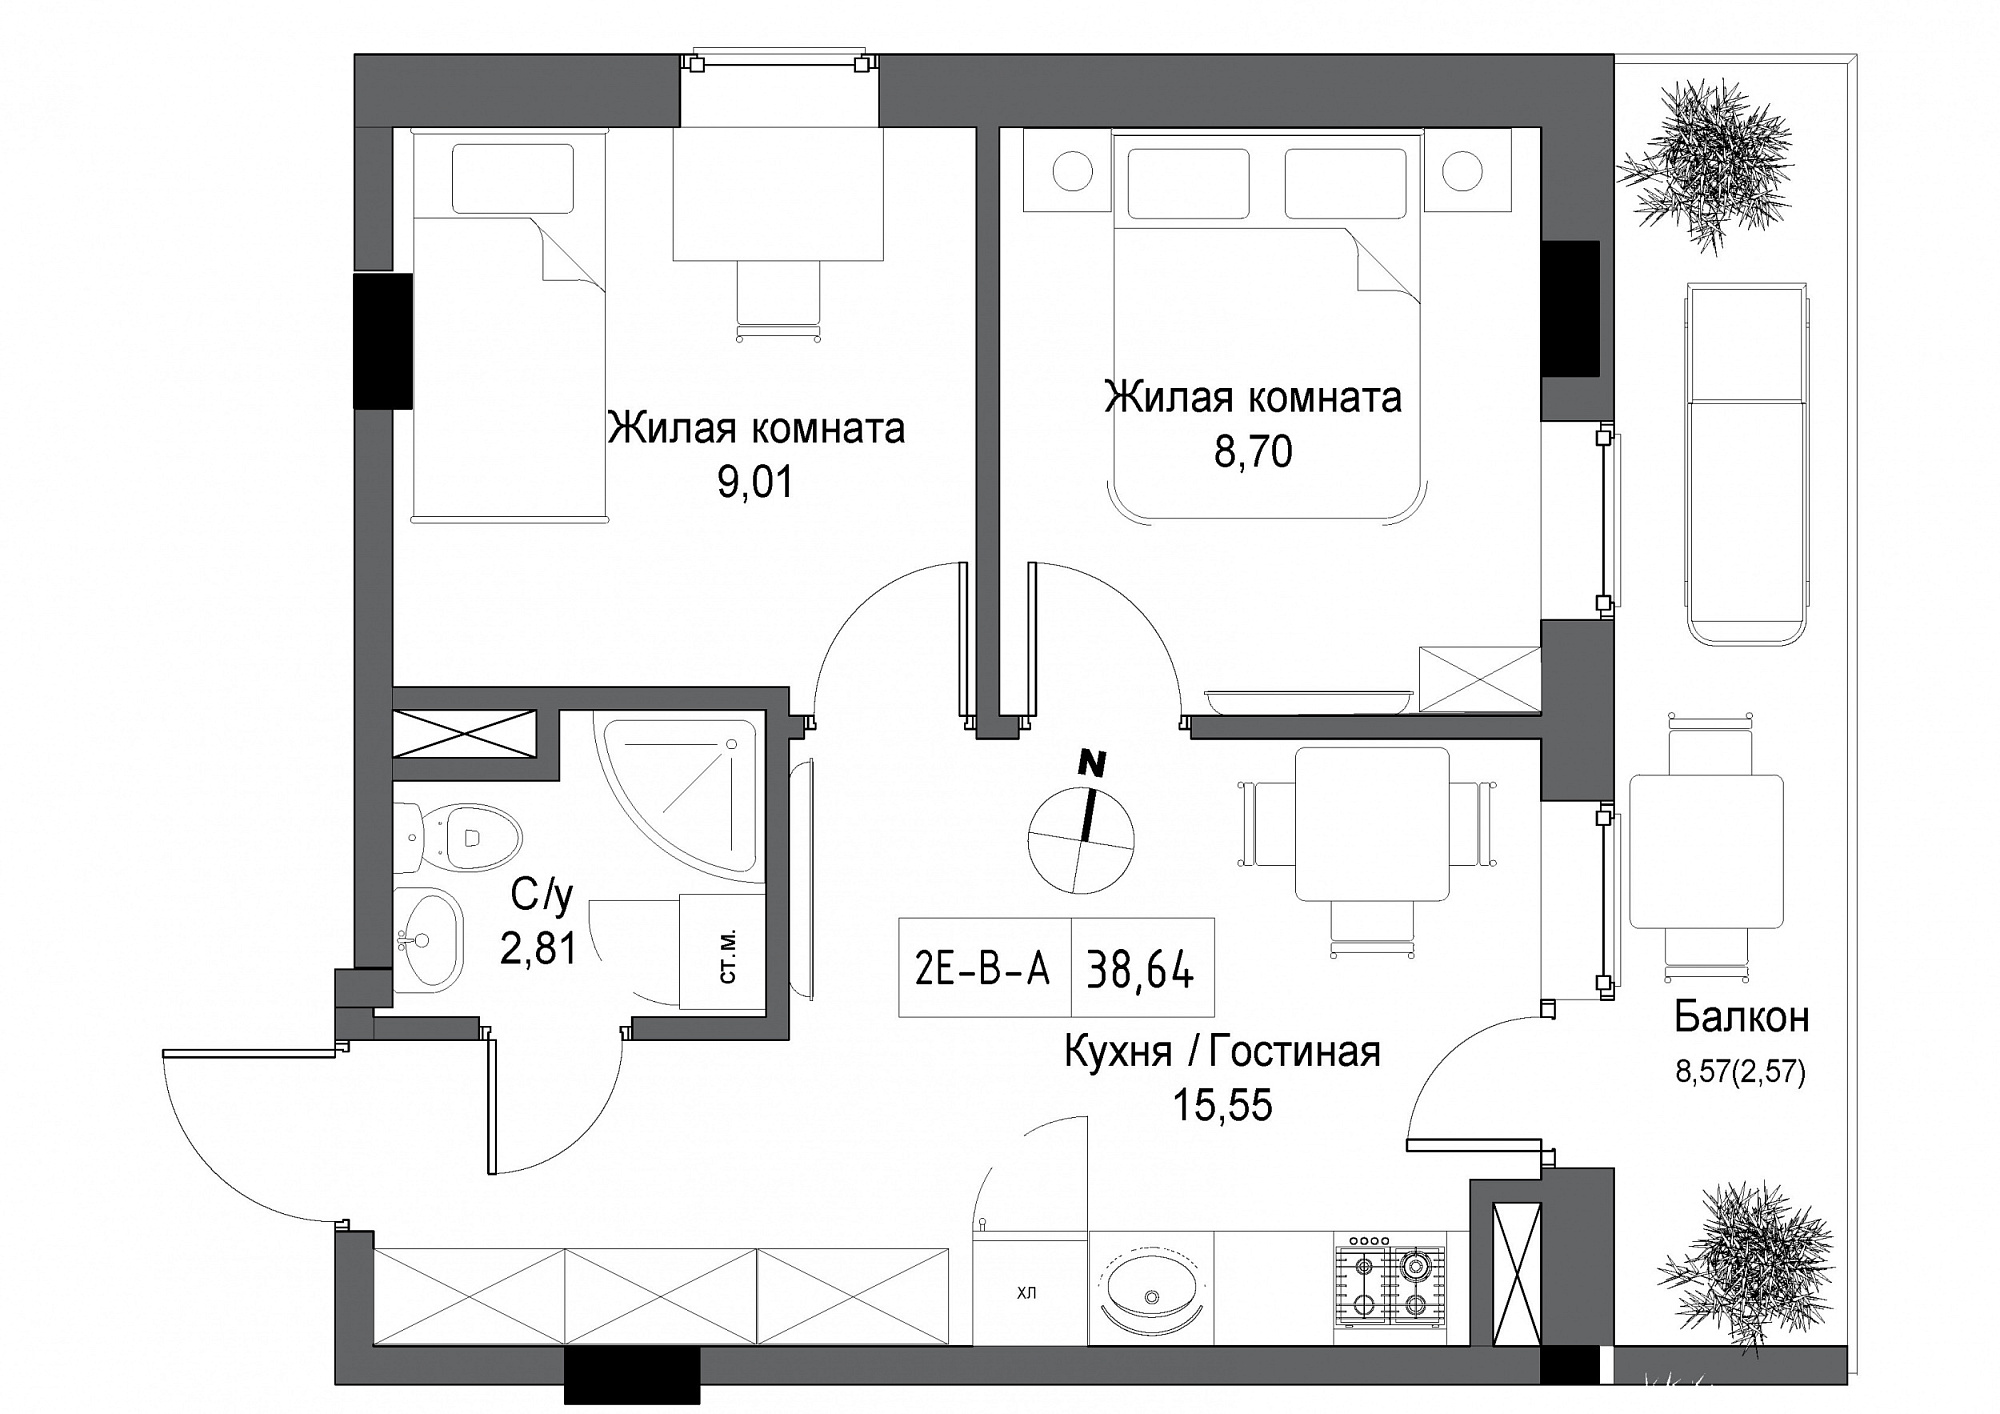 Planning 2-rm flats area 38.64m2, UM-004-04/0005.